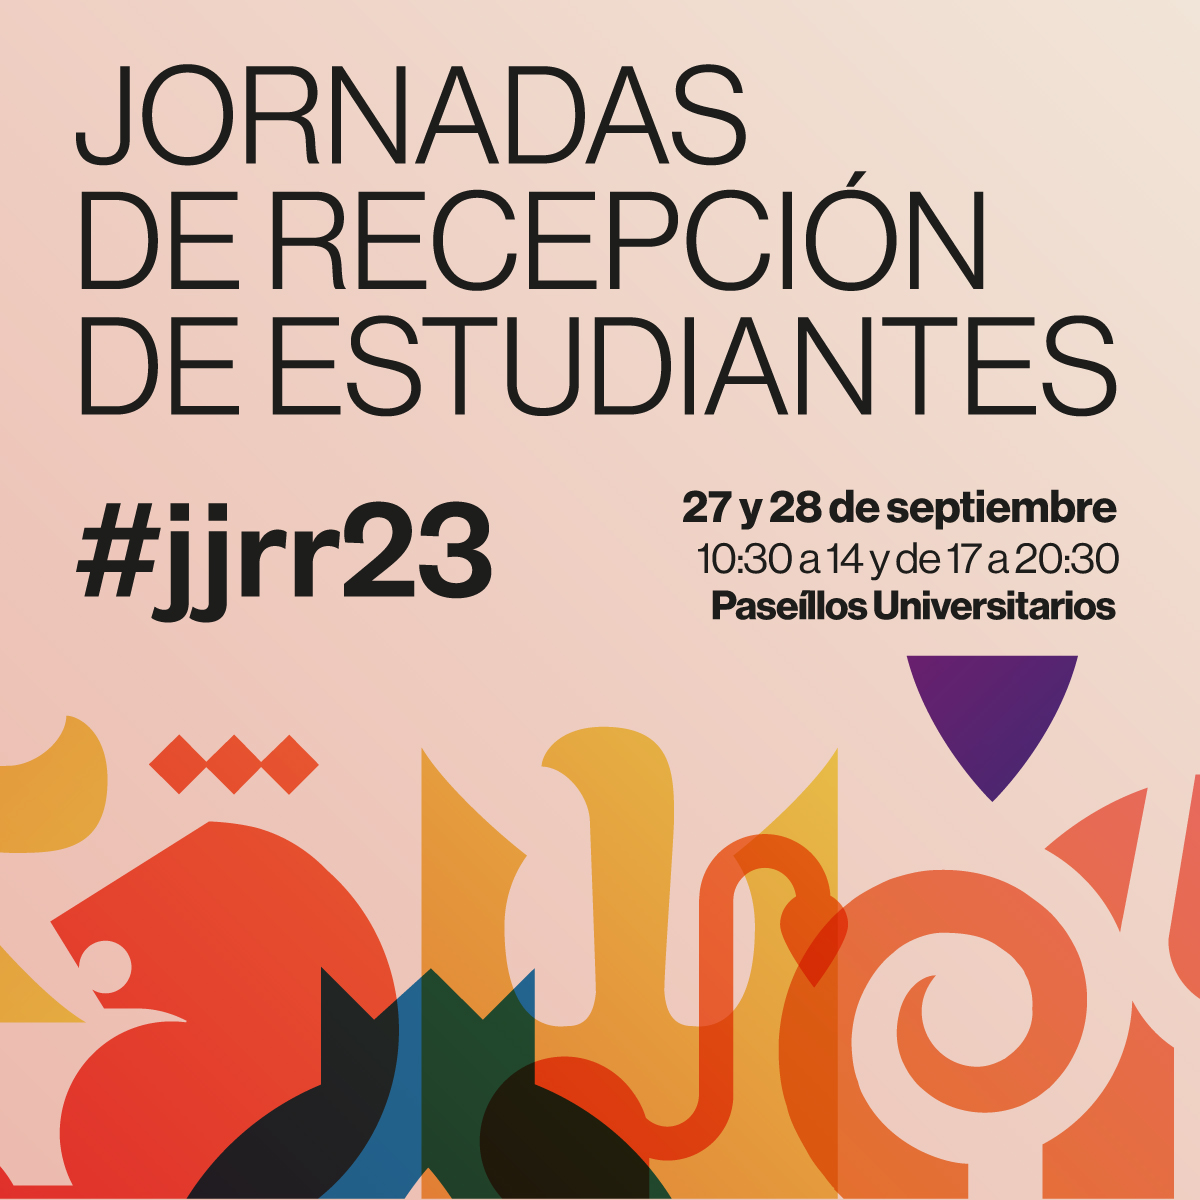 Cartel de las JJRR de 2023